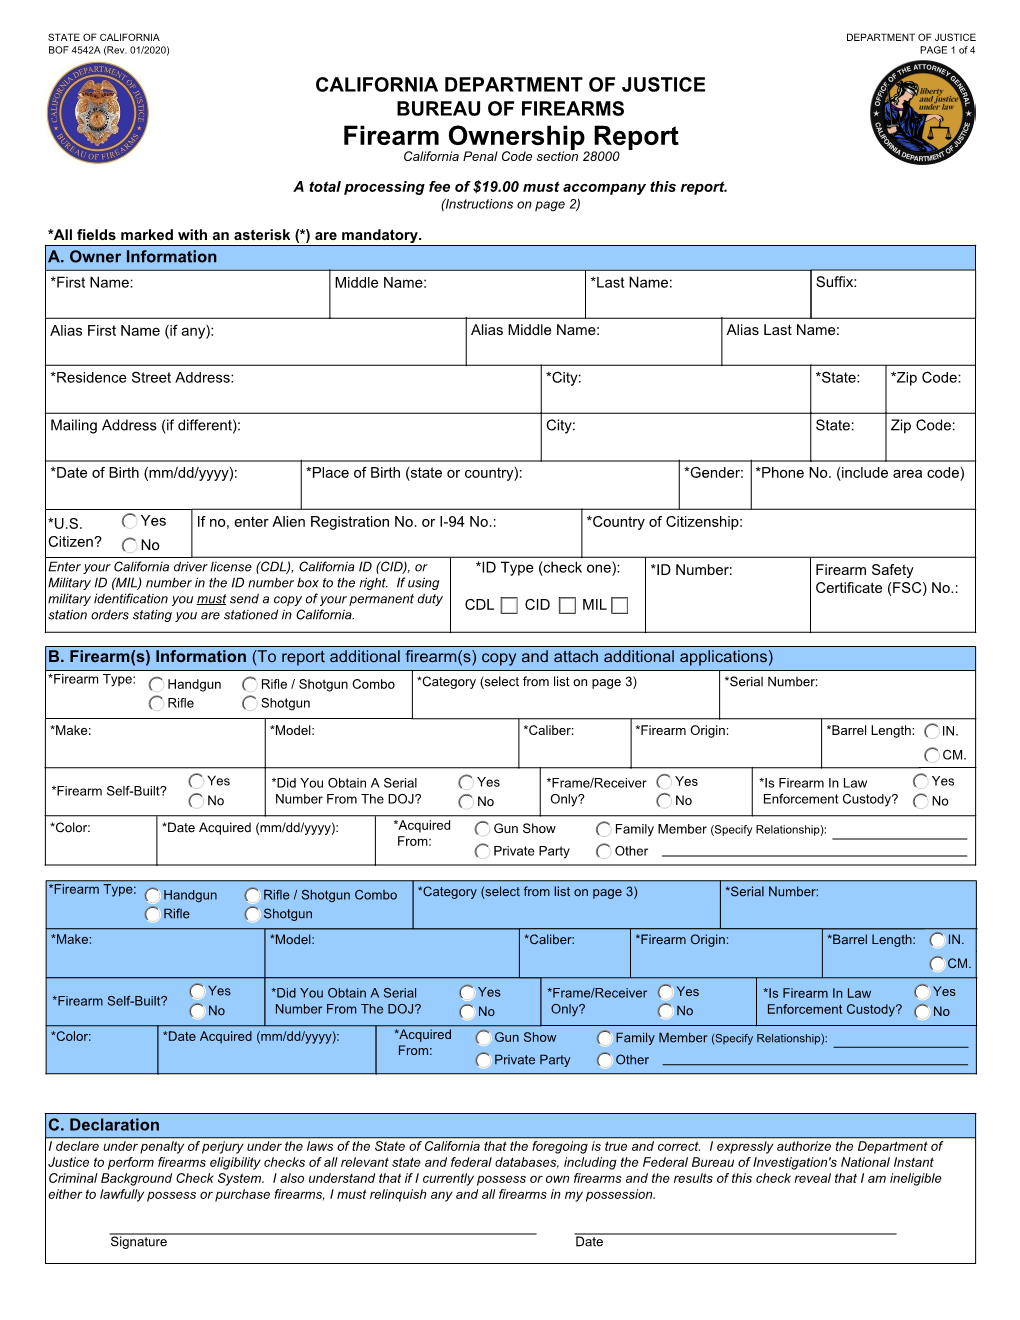 BOF 4542A Firearm Ownership Report